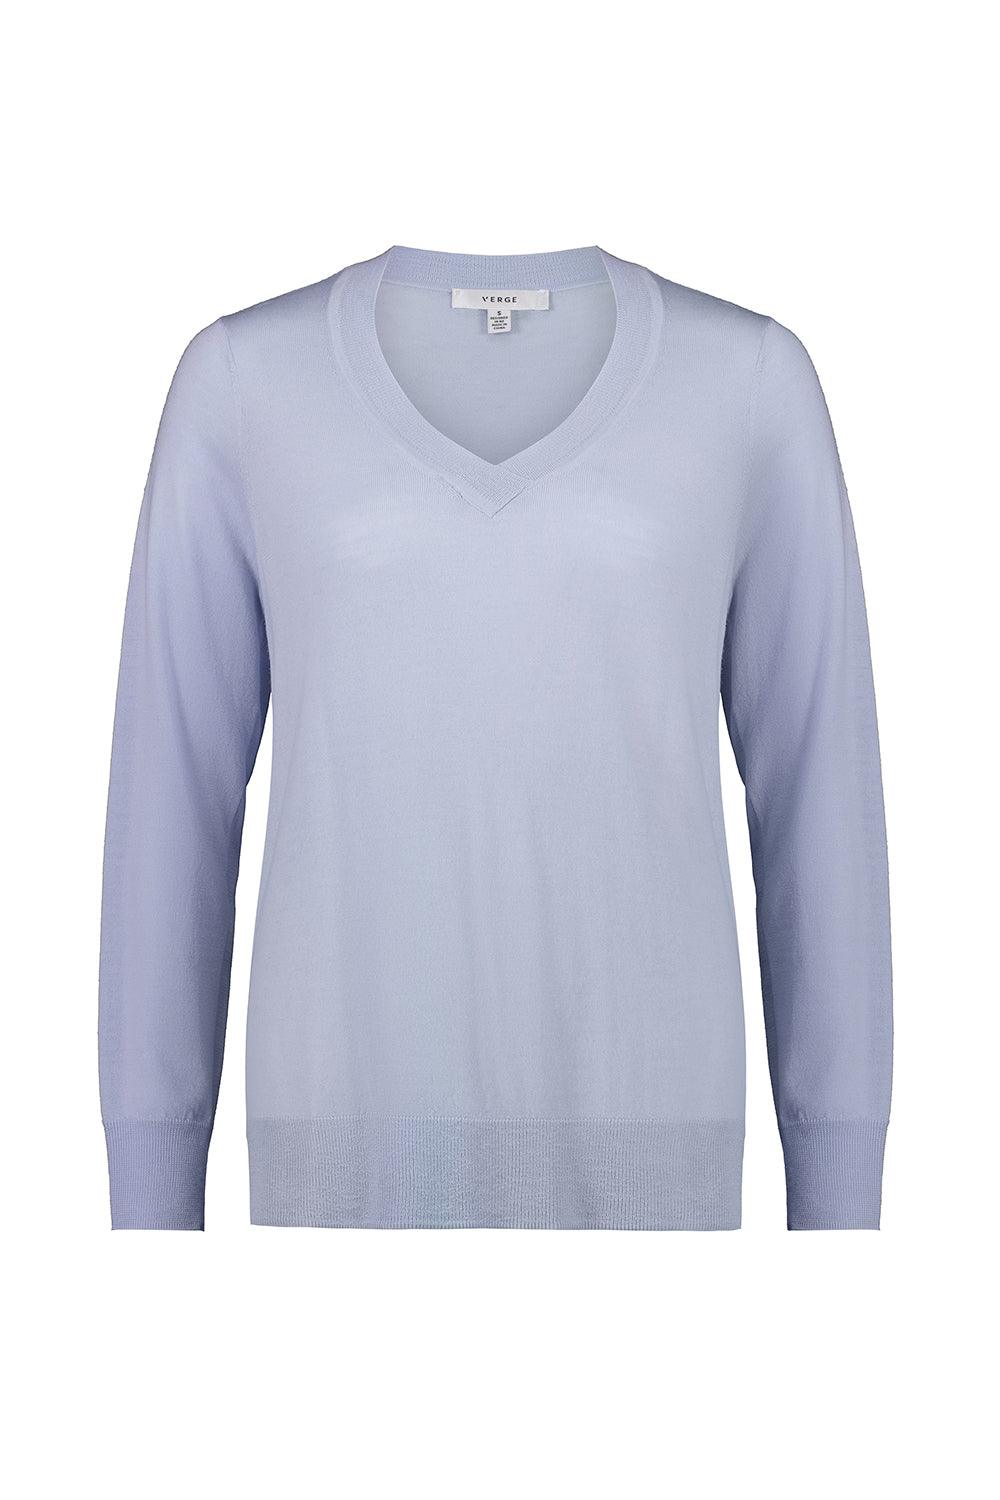 Network Sweater - Bluebell - VERGE